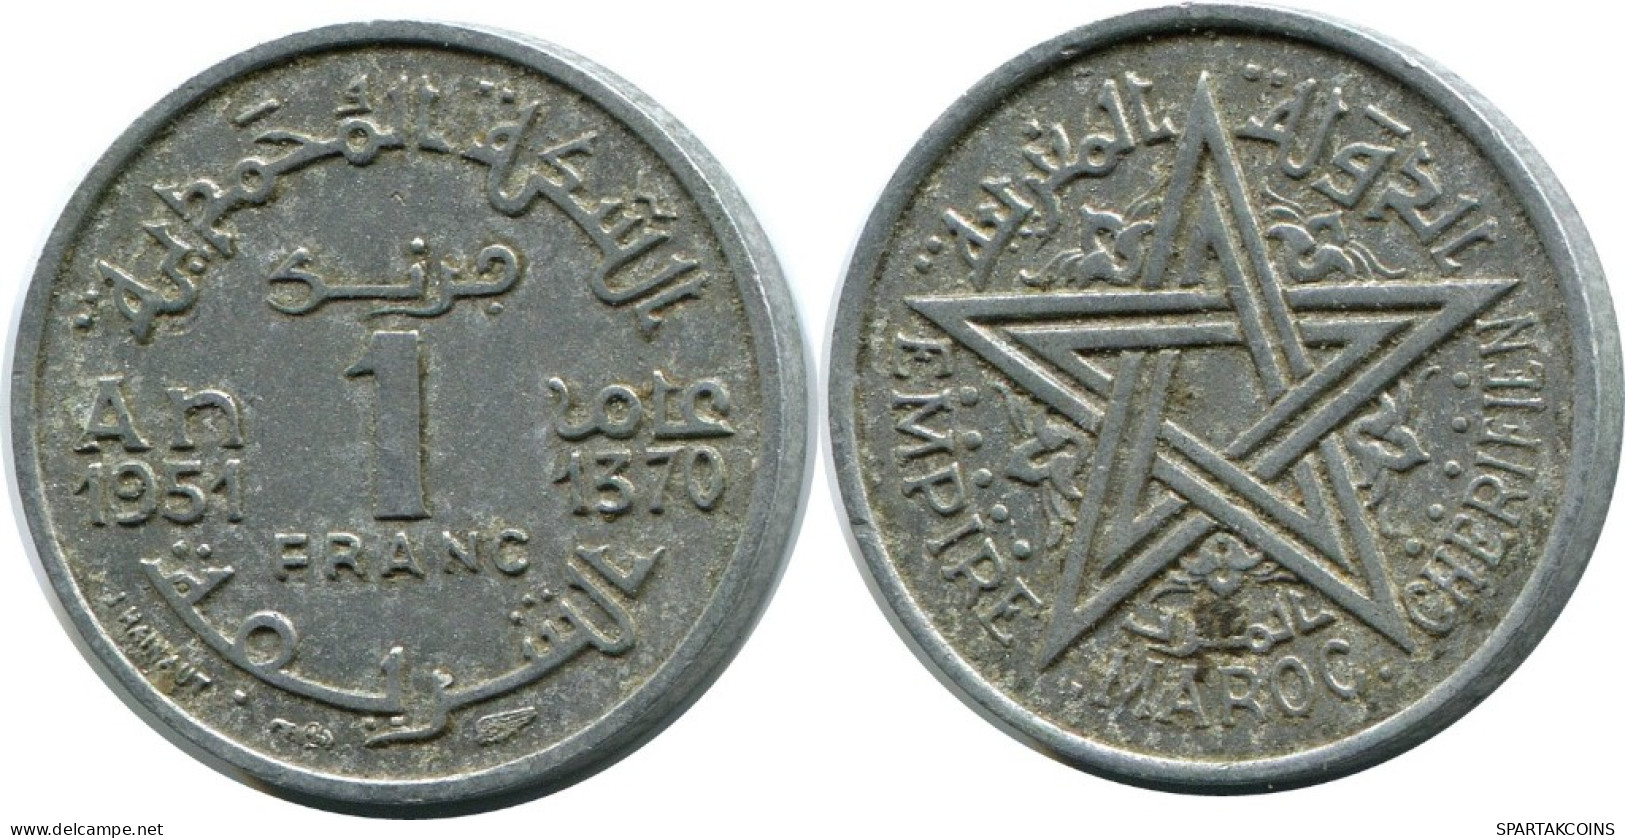 1 FRANC 1951 MOROCCO Islamic Coin #AH695.3.U.A - Morocco